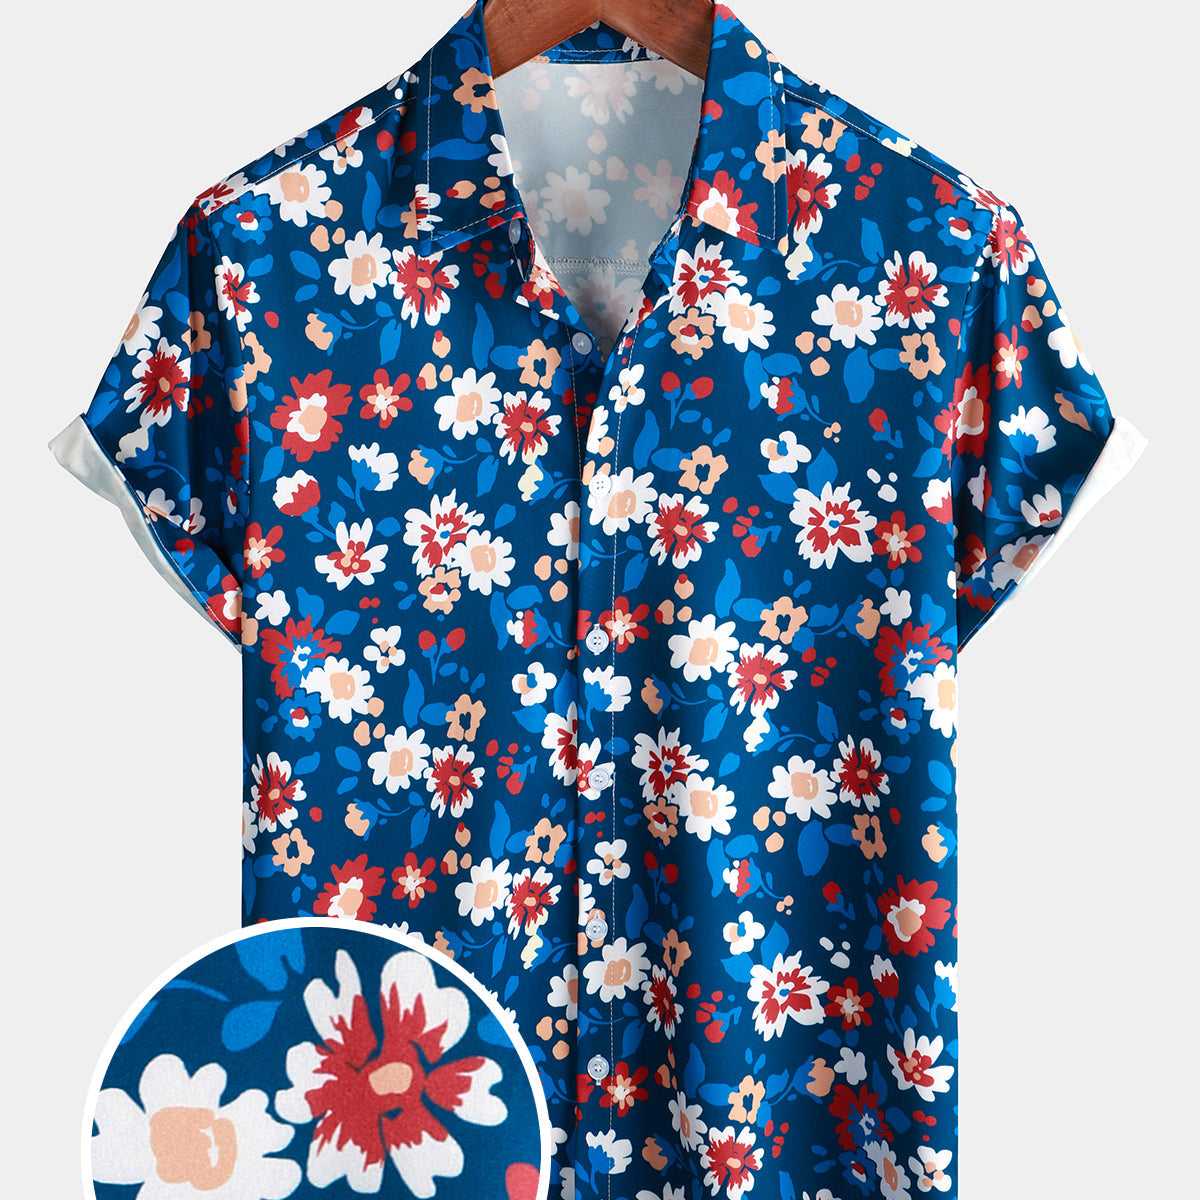 Men's Holiday Blue Flower Print Button Up Floral Vintage Short Sleeve Shirt